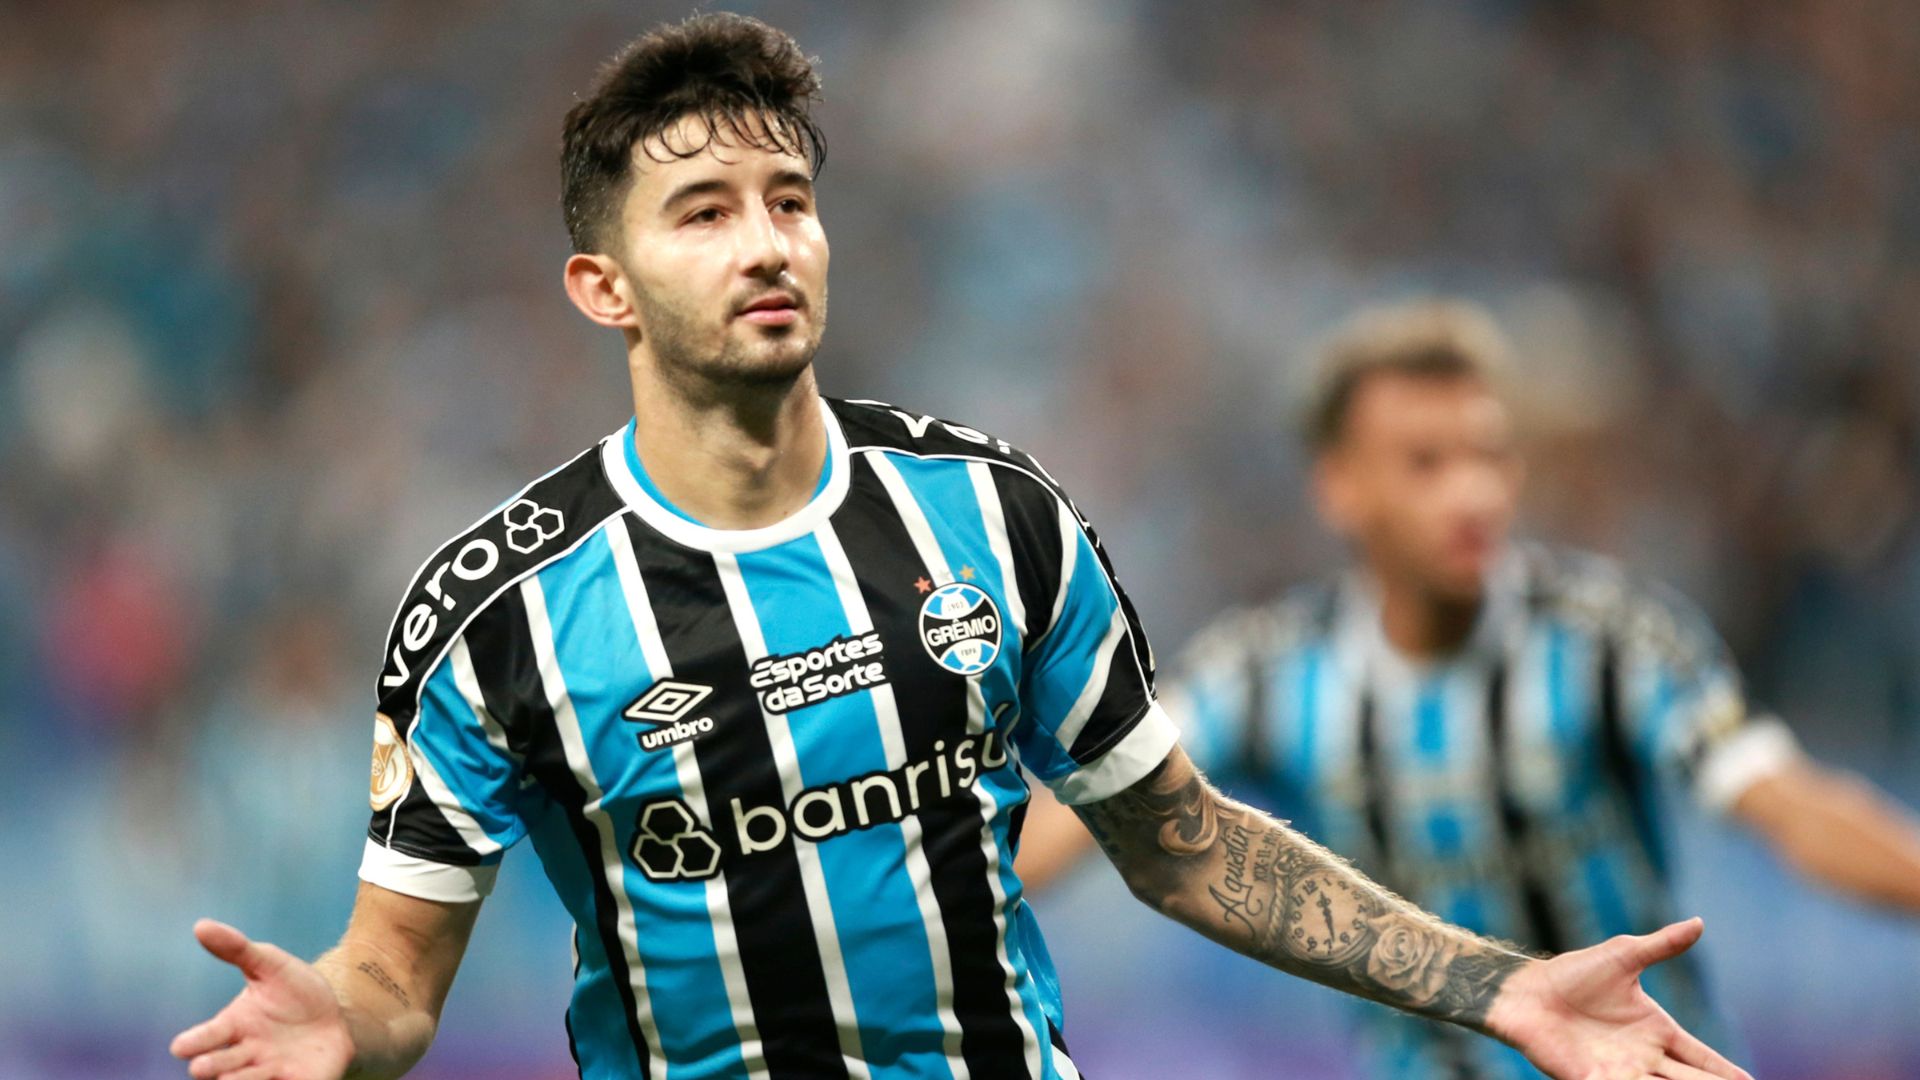 Vilassanti comemorando segundo gol do Grêmio (Crédito: Getty Images)